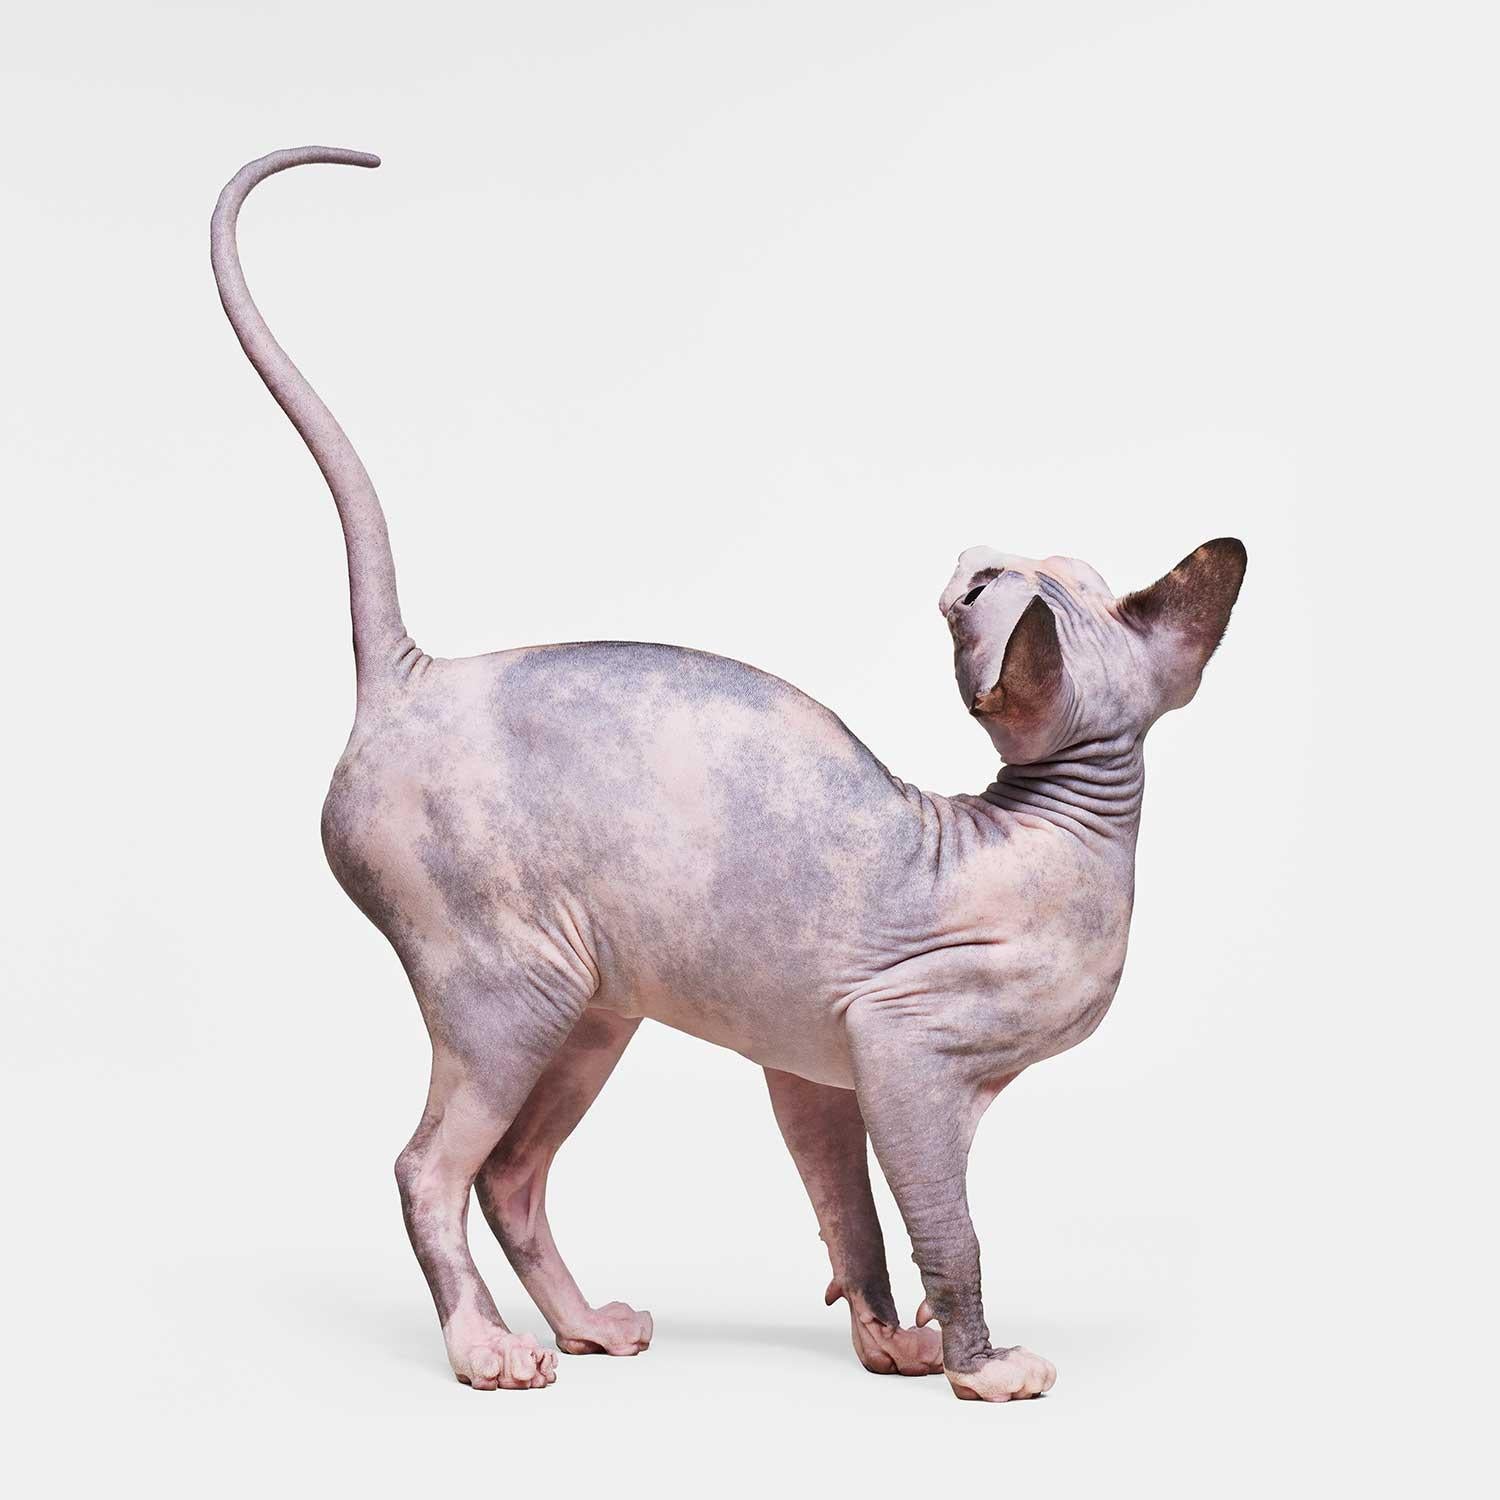 Randal Ford - Sphinx Katze Nr. 2, Fotografie 2018